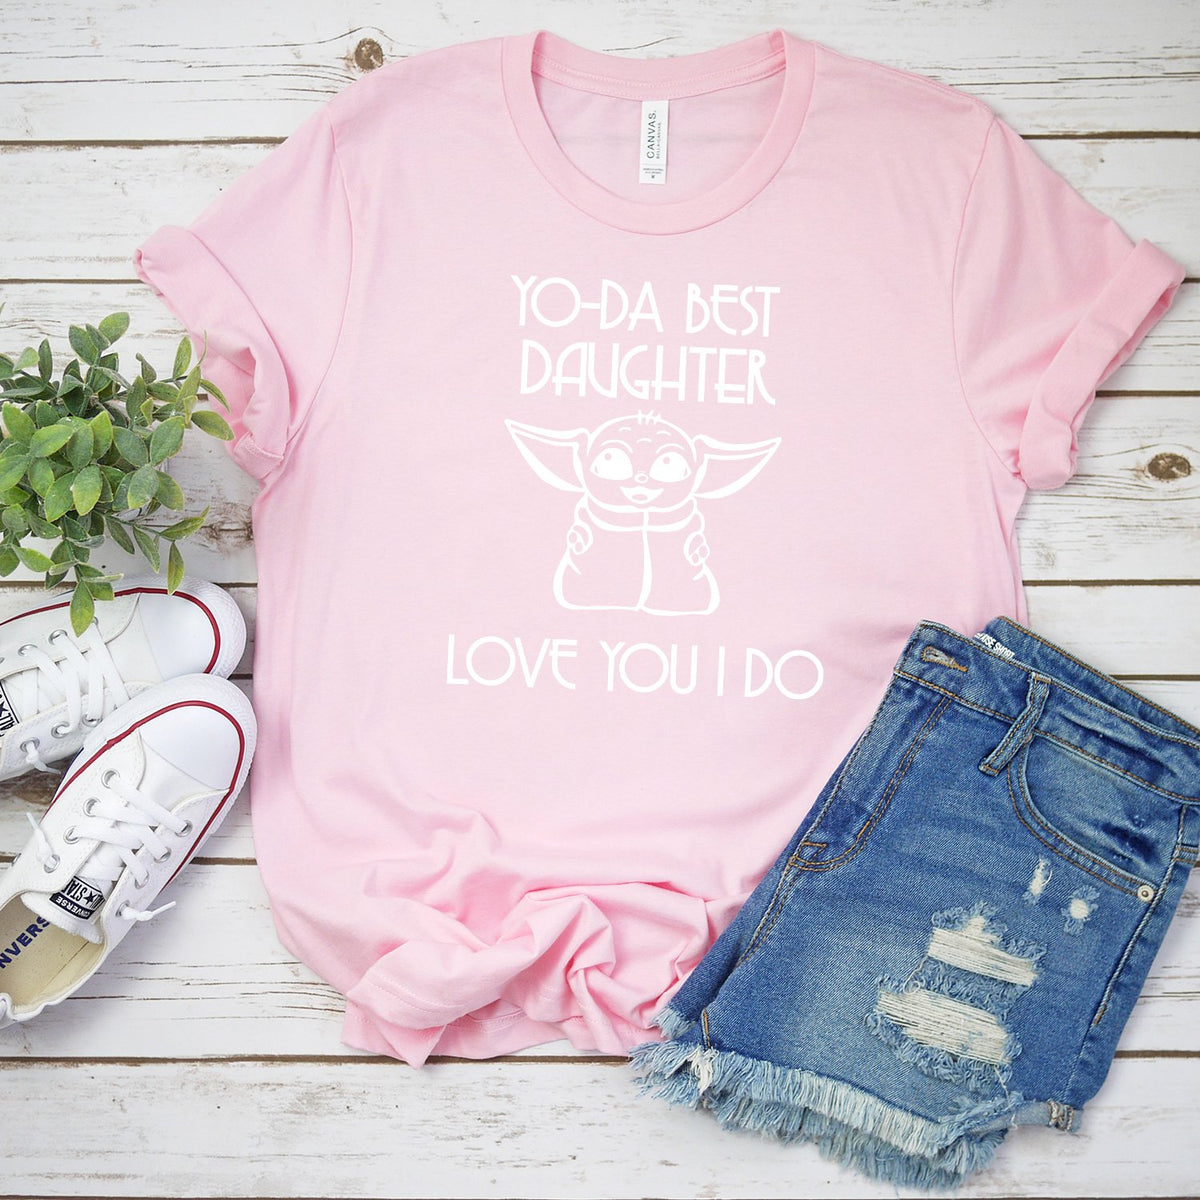 Yo-Da Best Daughter Love You I Do - Short Sleeve Tee Shirt